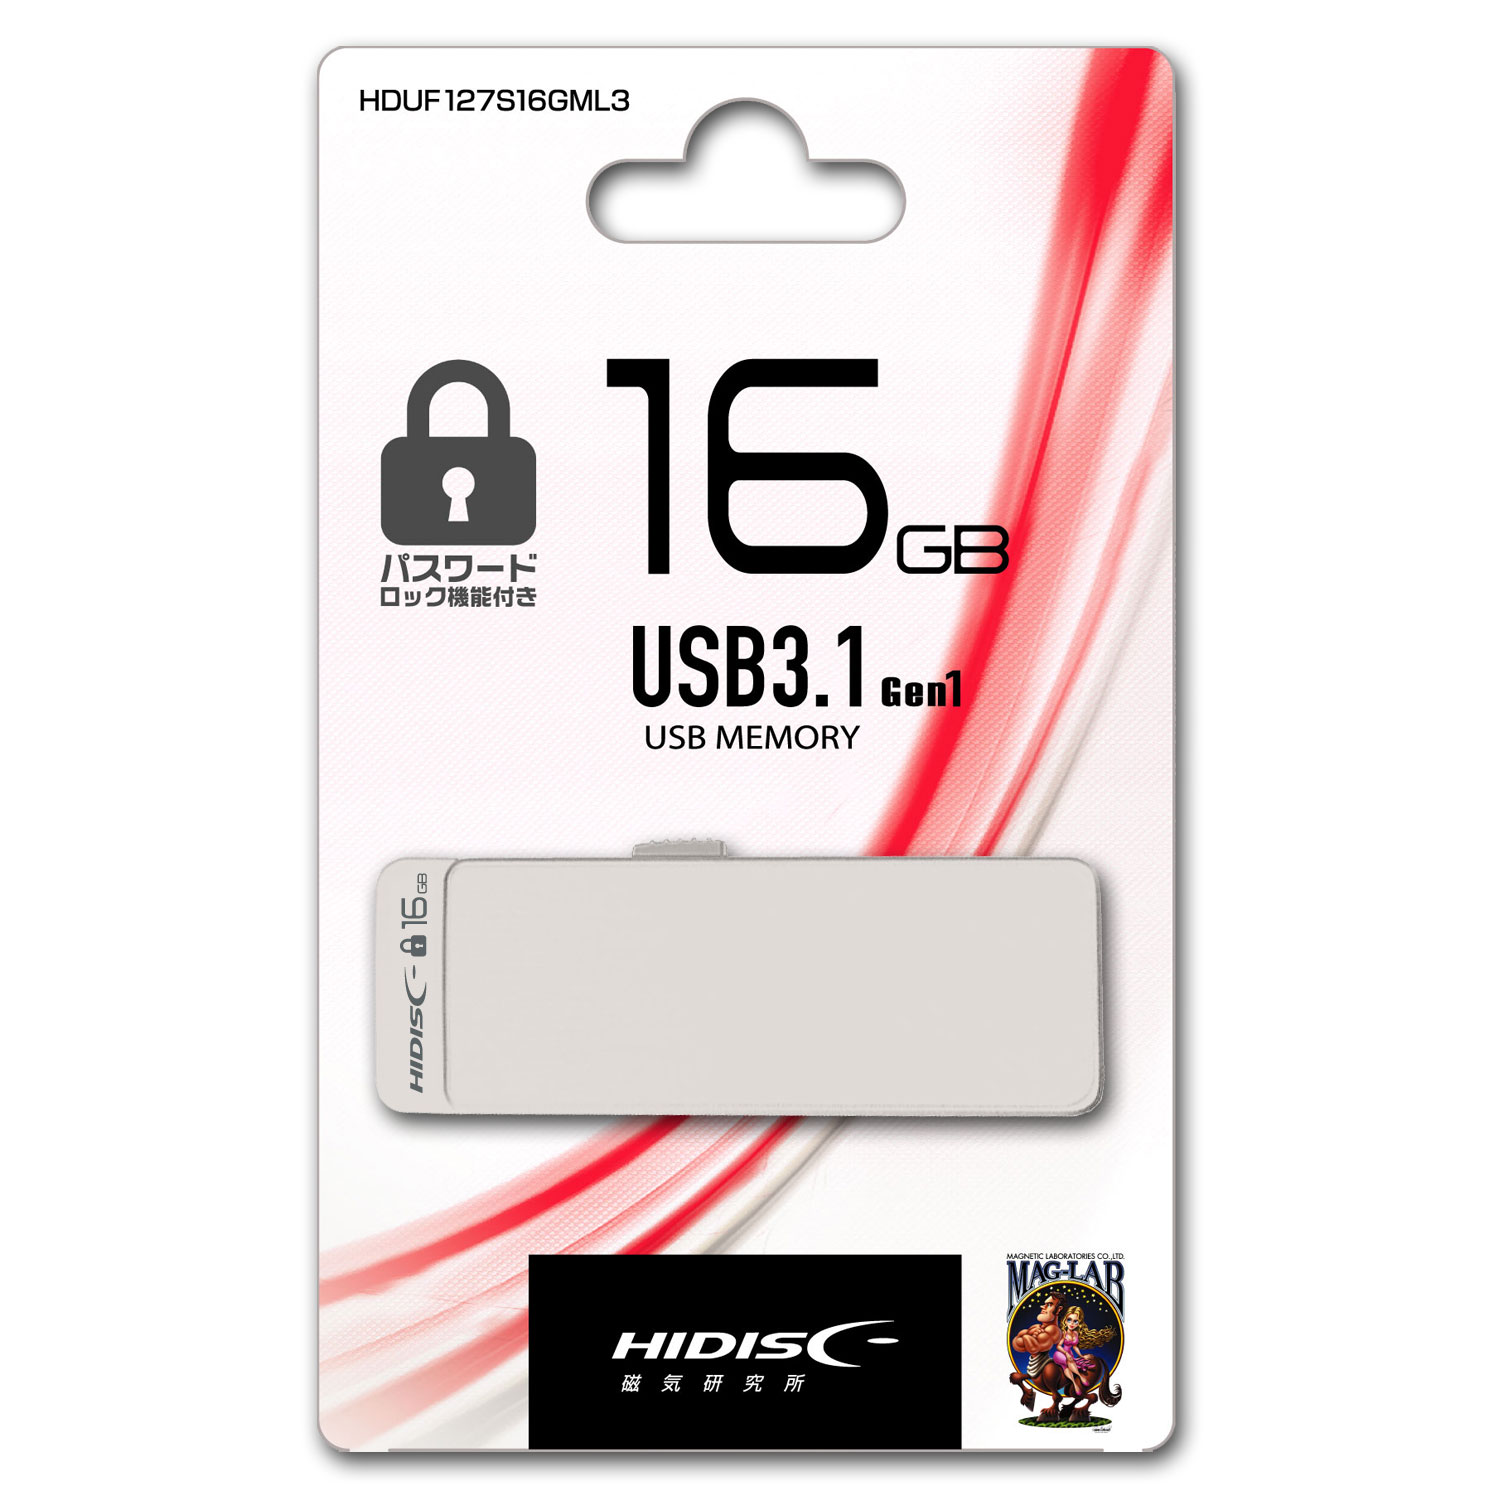 HIDISC USB 3.1, Gen1 パスワードロック機能付きフラッシュドライブ 16GB スライド式 HDUF127S16GML3